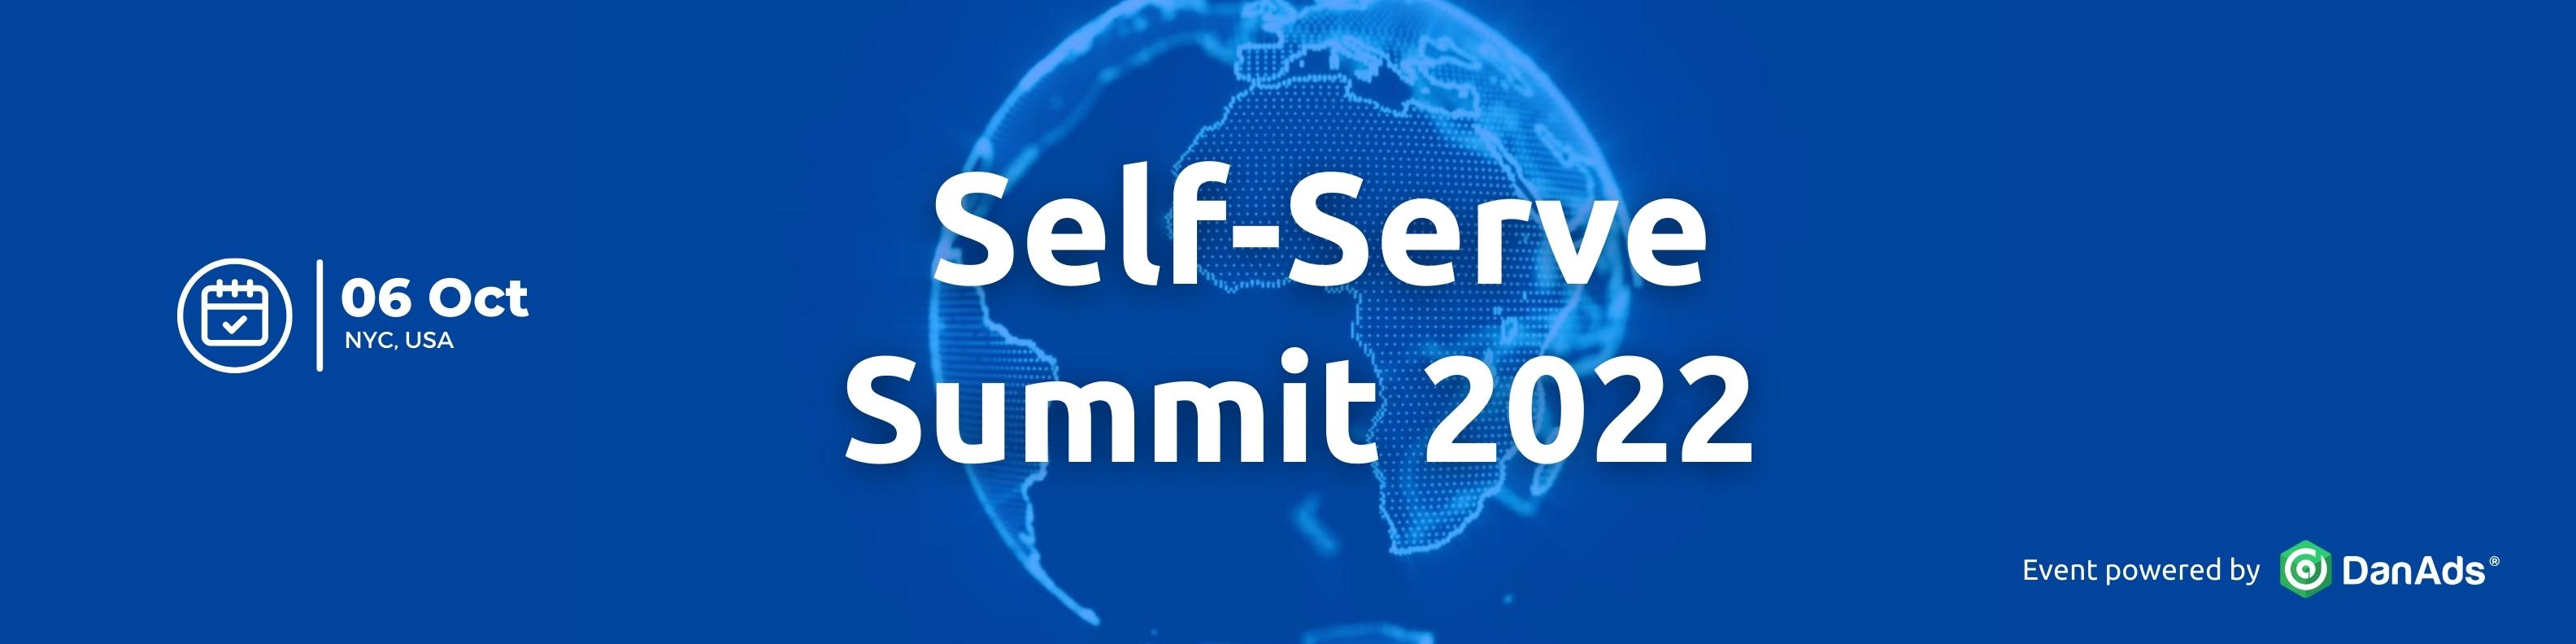 Self-Serve Summit 2022